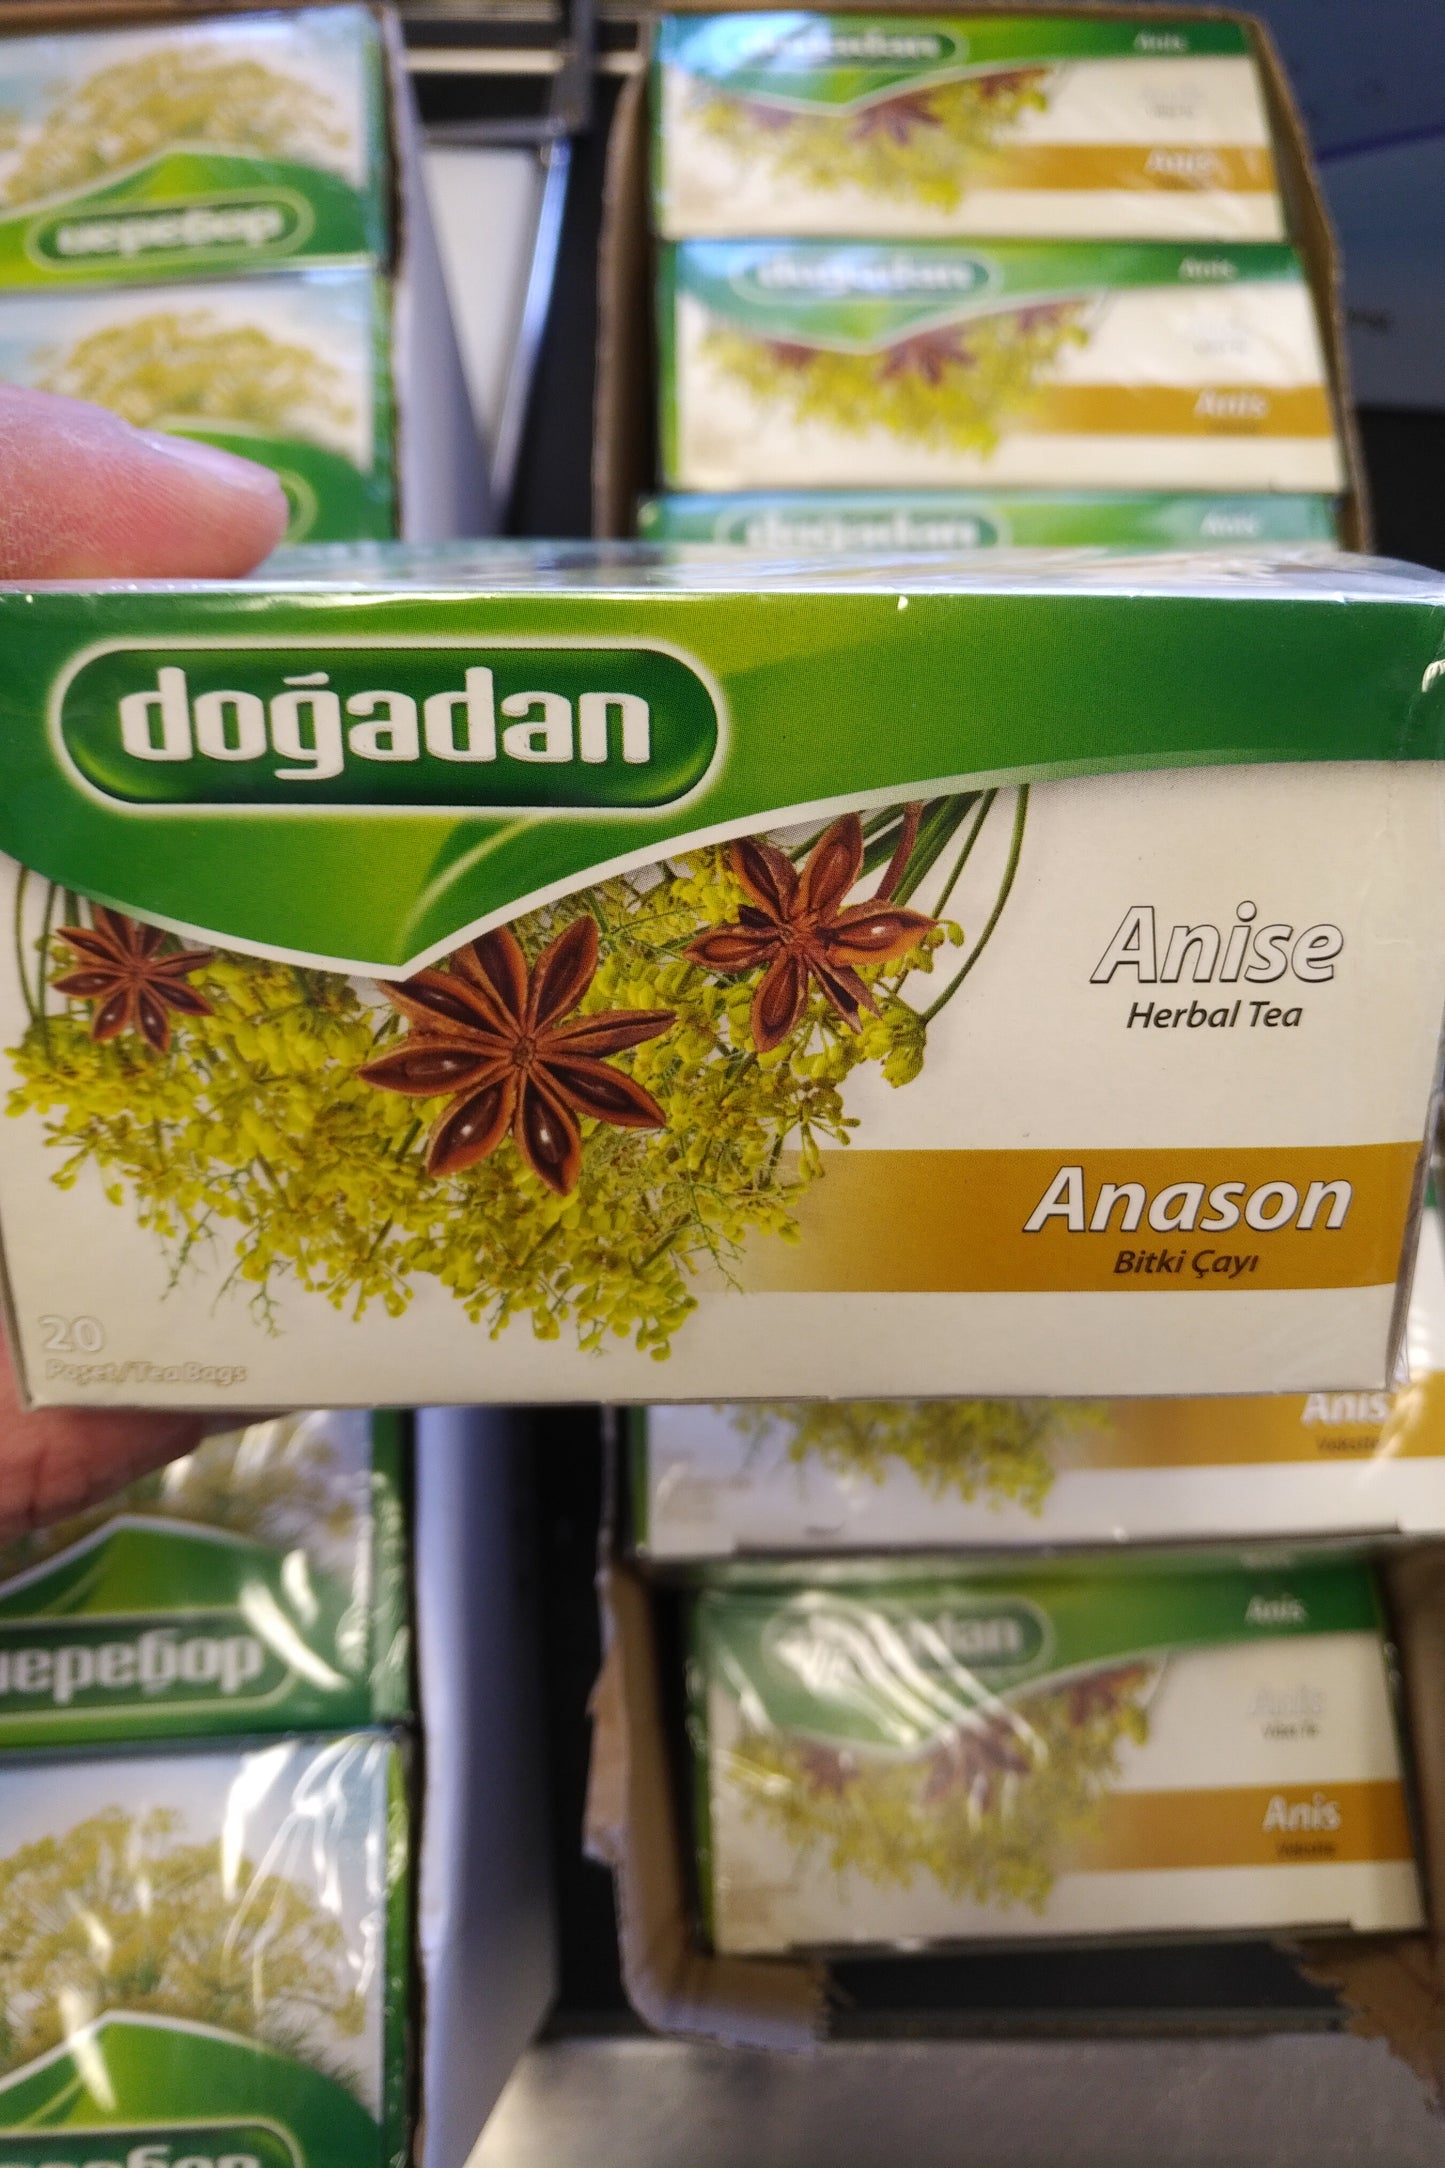 Dogadan Anise Herbal Tea Anason Bitki Cayi 20 tea Bags